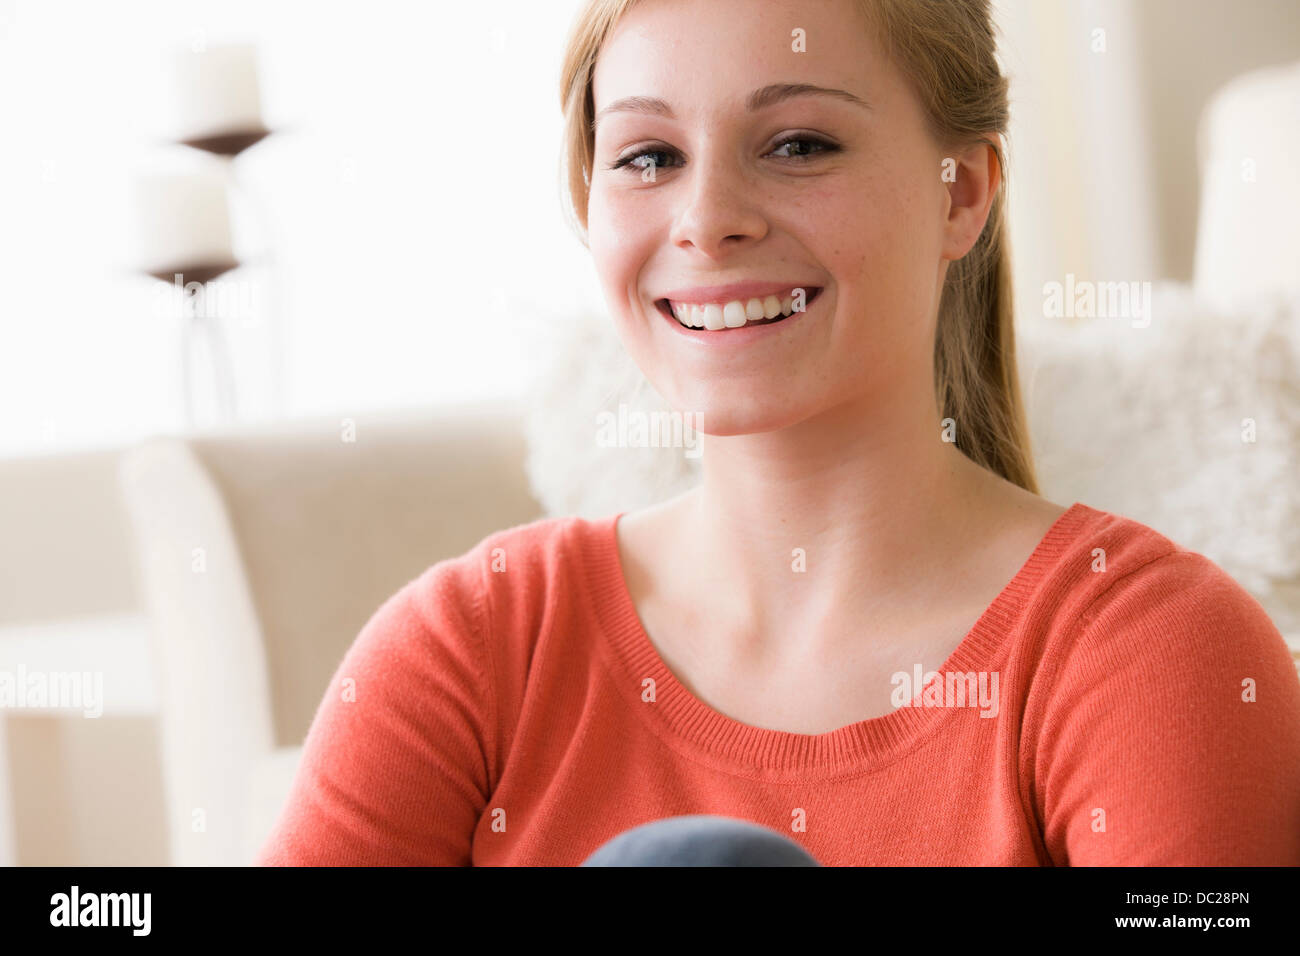 Portrait of confident teenage girl smiling Stock Photo